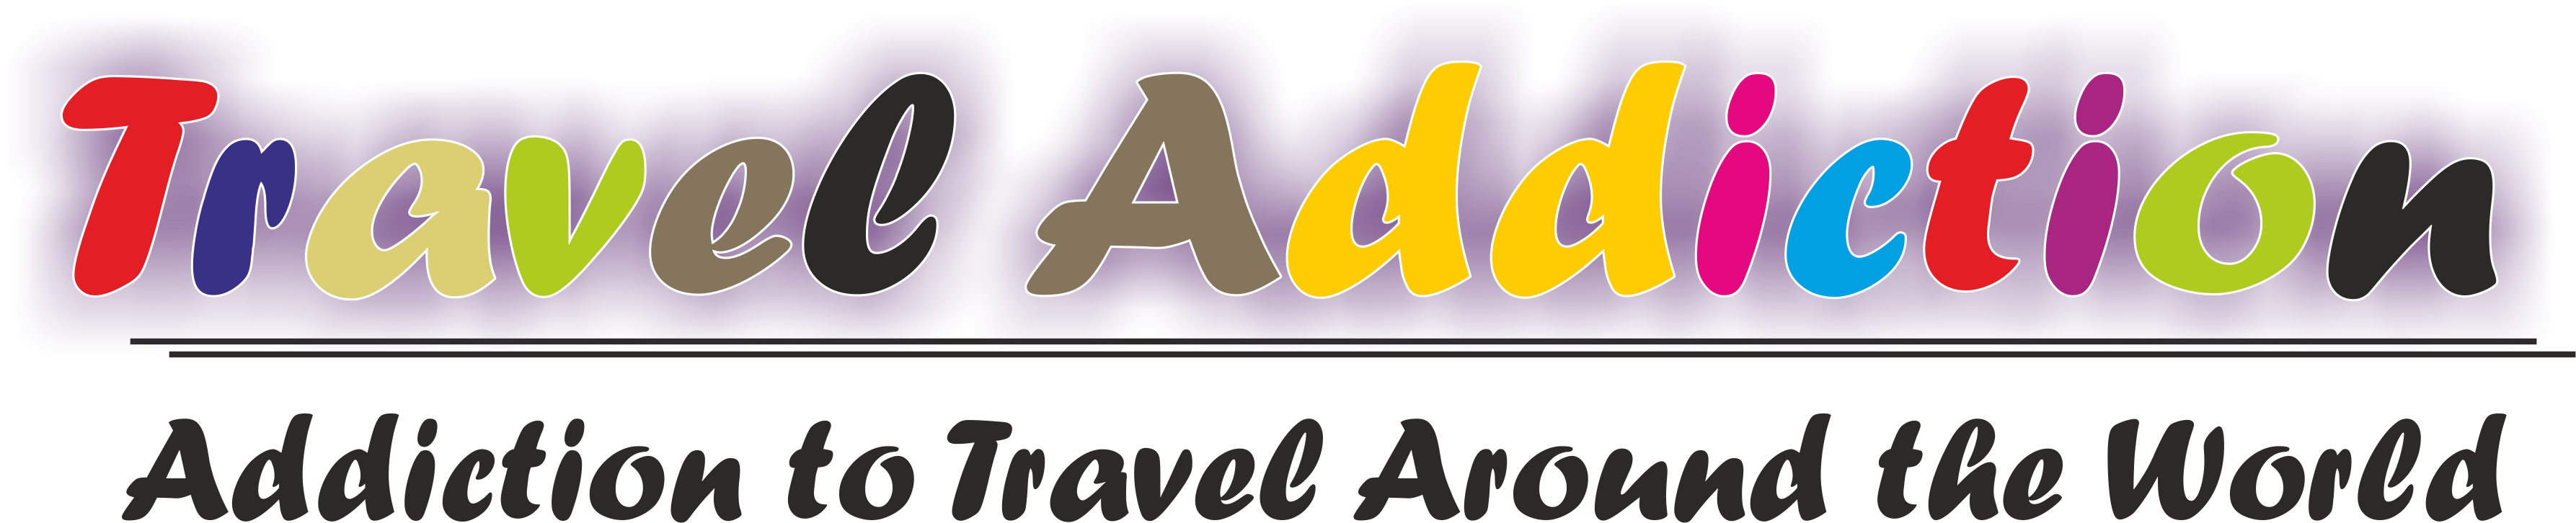 the travel addiction agency